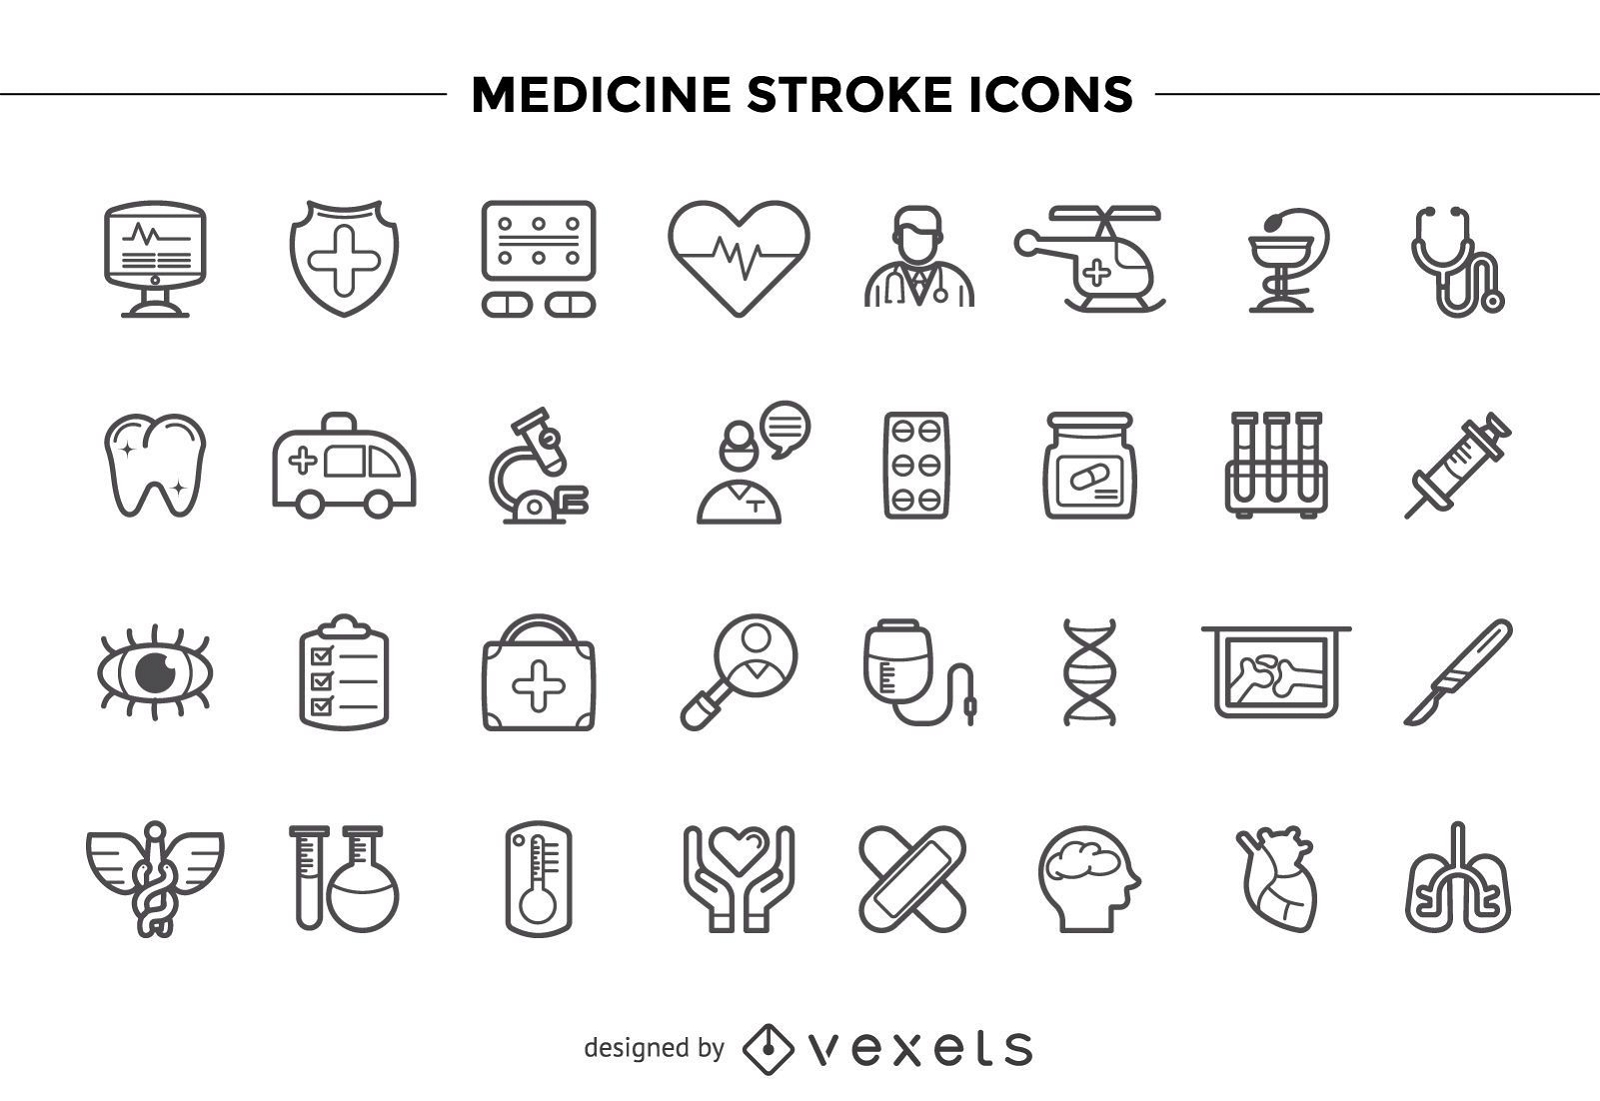 Medicine stroke icons set